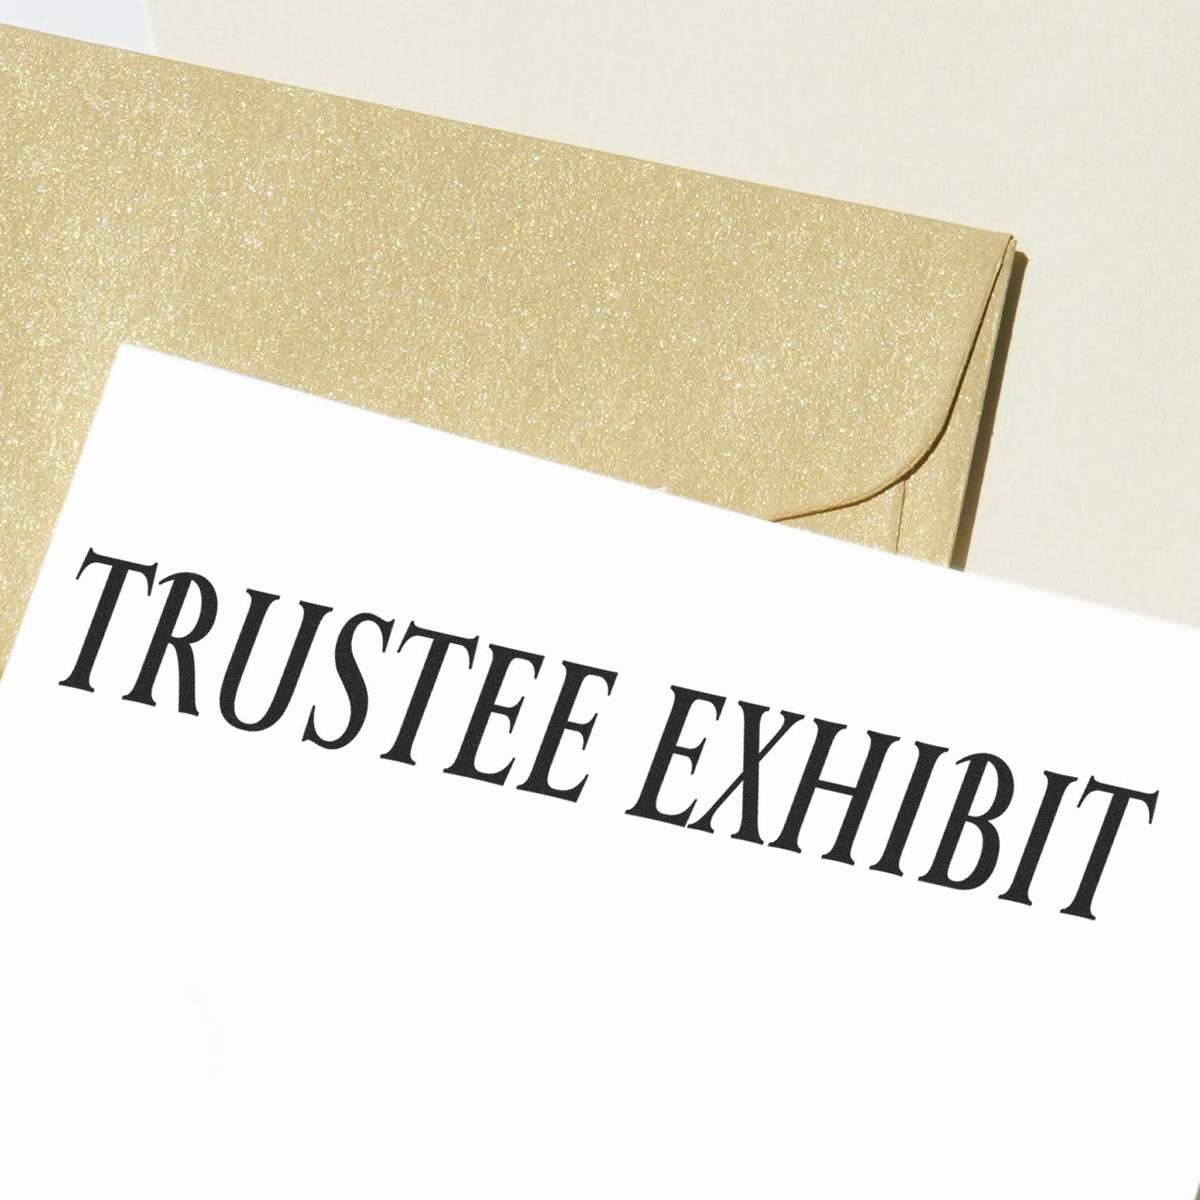 Large Trustee Exhibit Rubber Stamp Lifestyle Photo